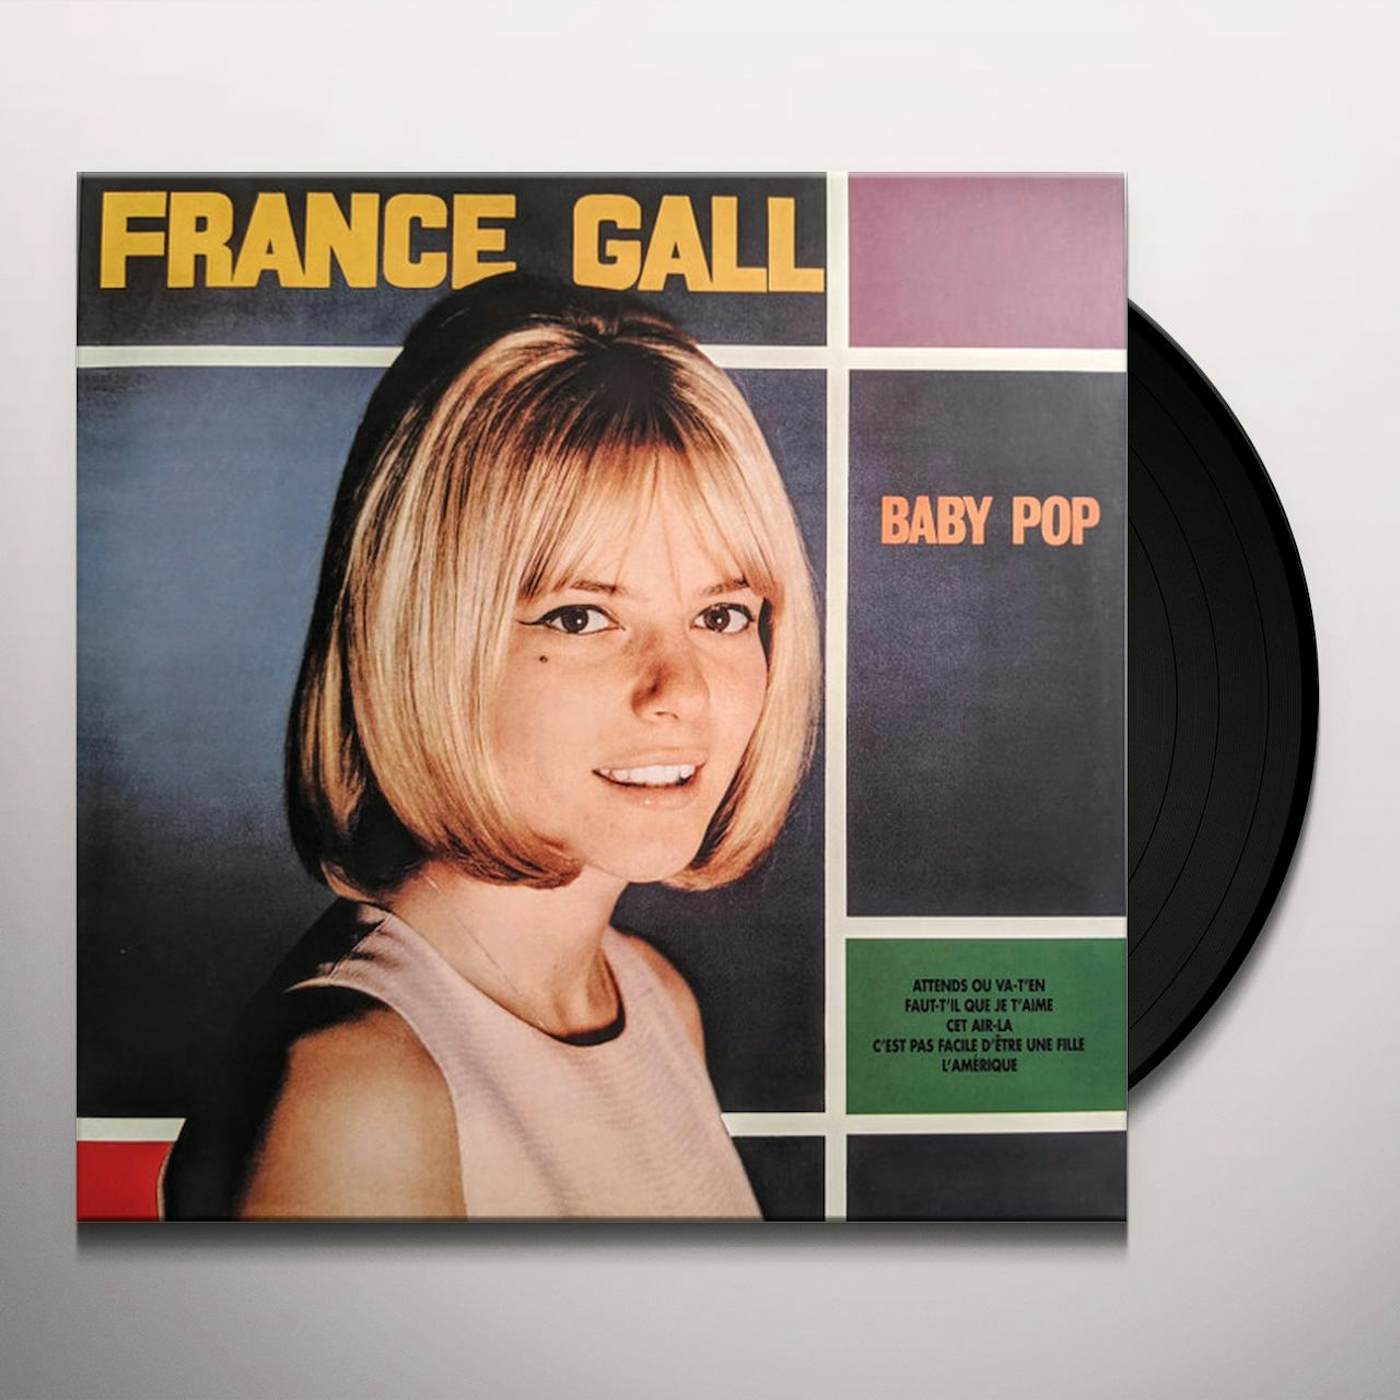 France Gall - Baby Pop (Vinyl LP)